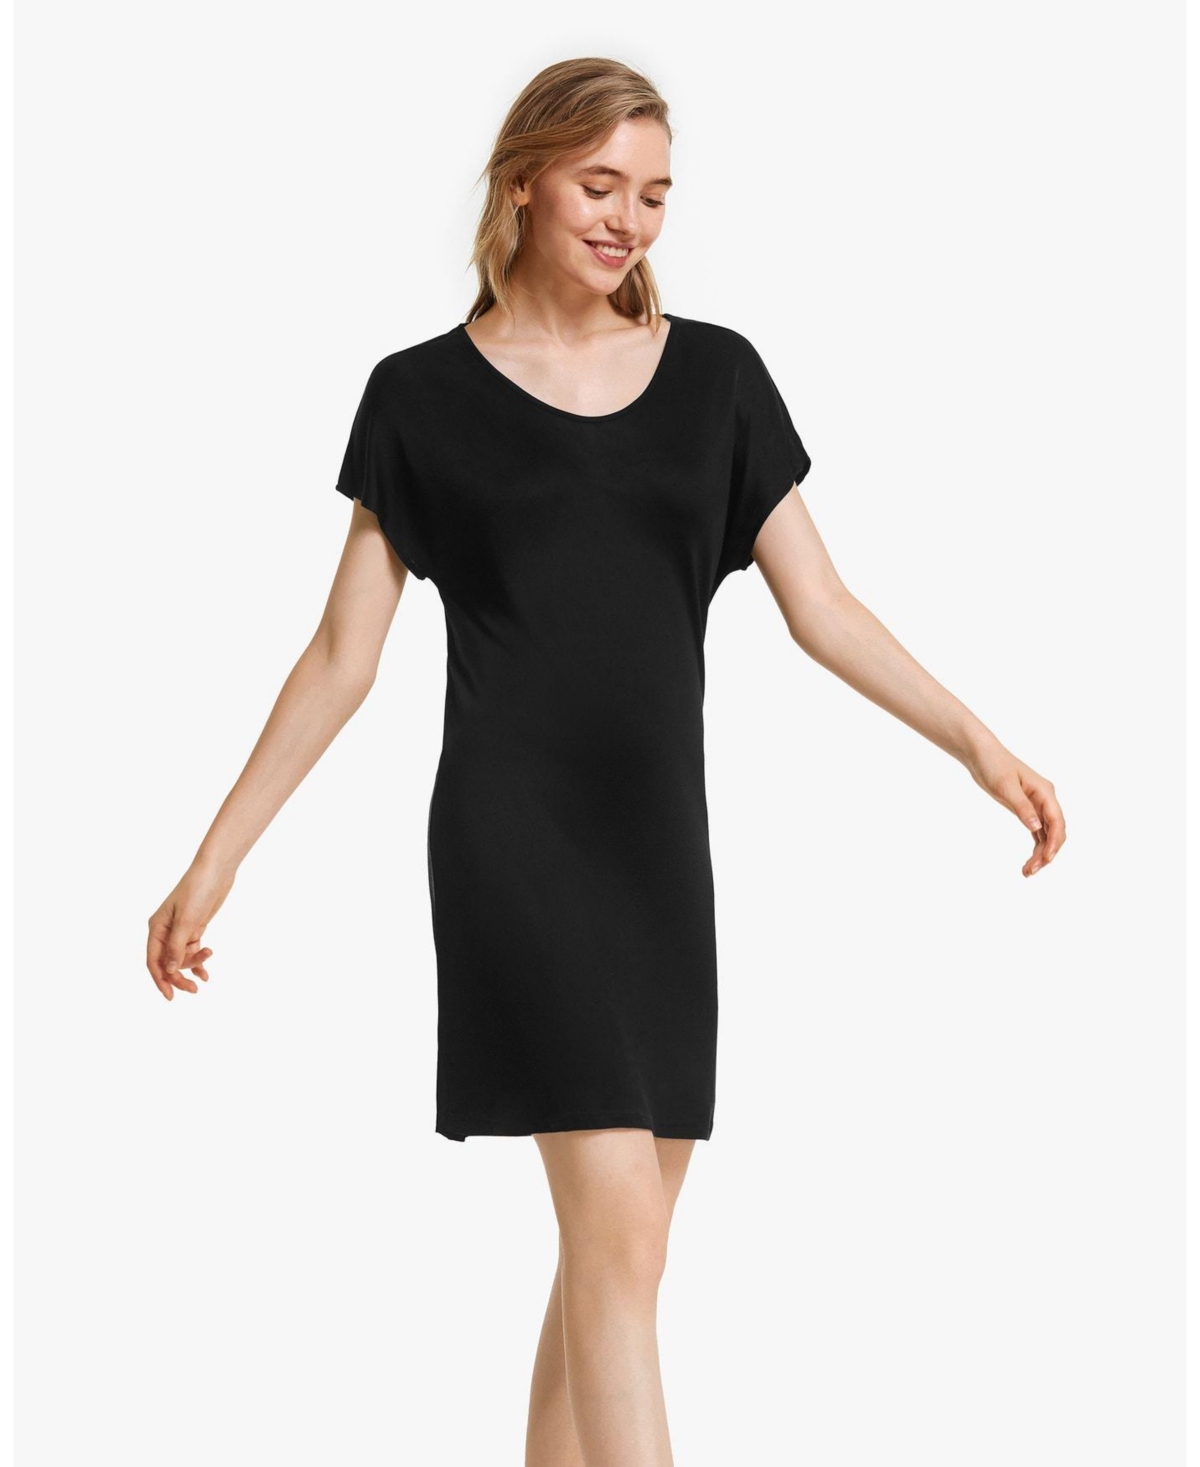 T-shirt Style Silk-Knit Sleep Dress for Women - Black